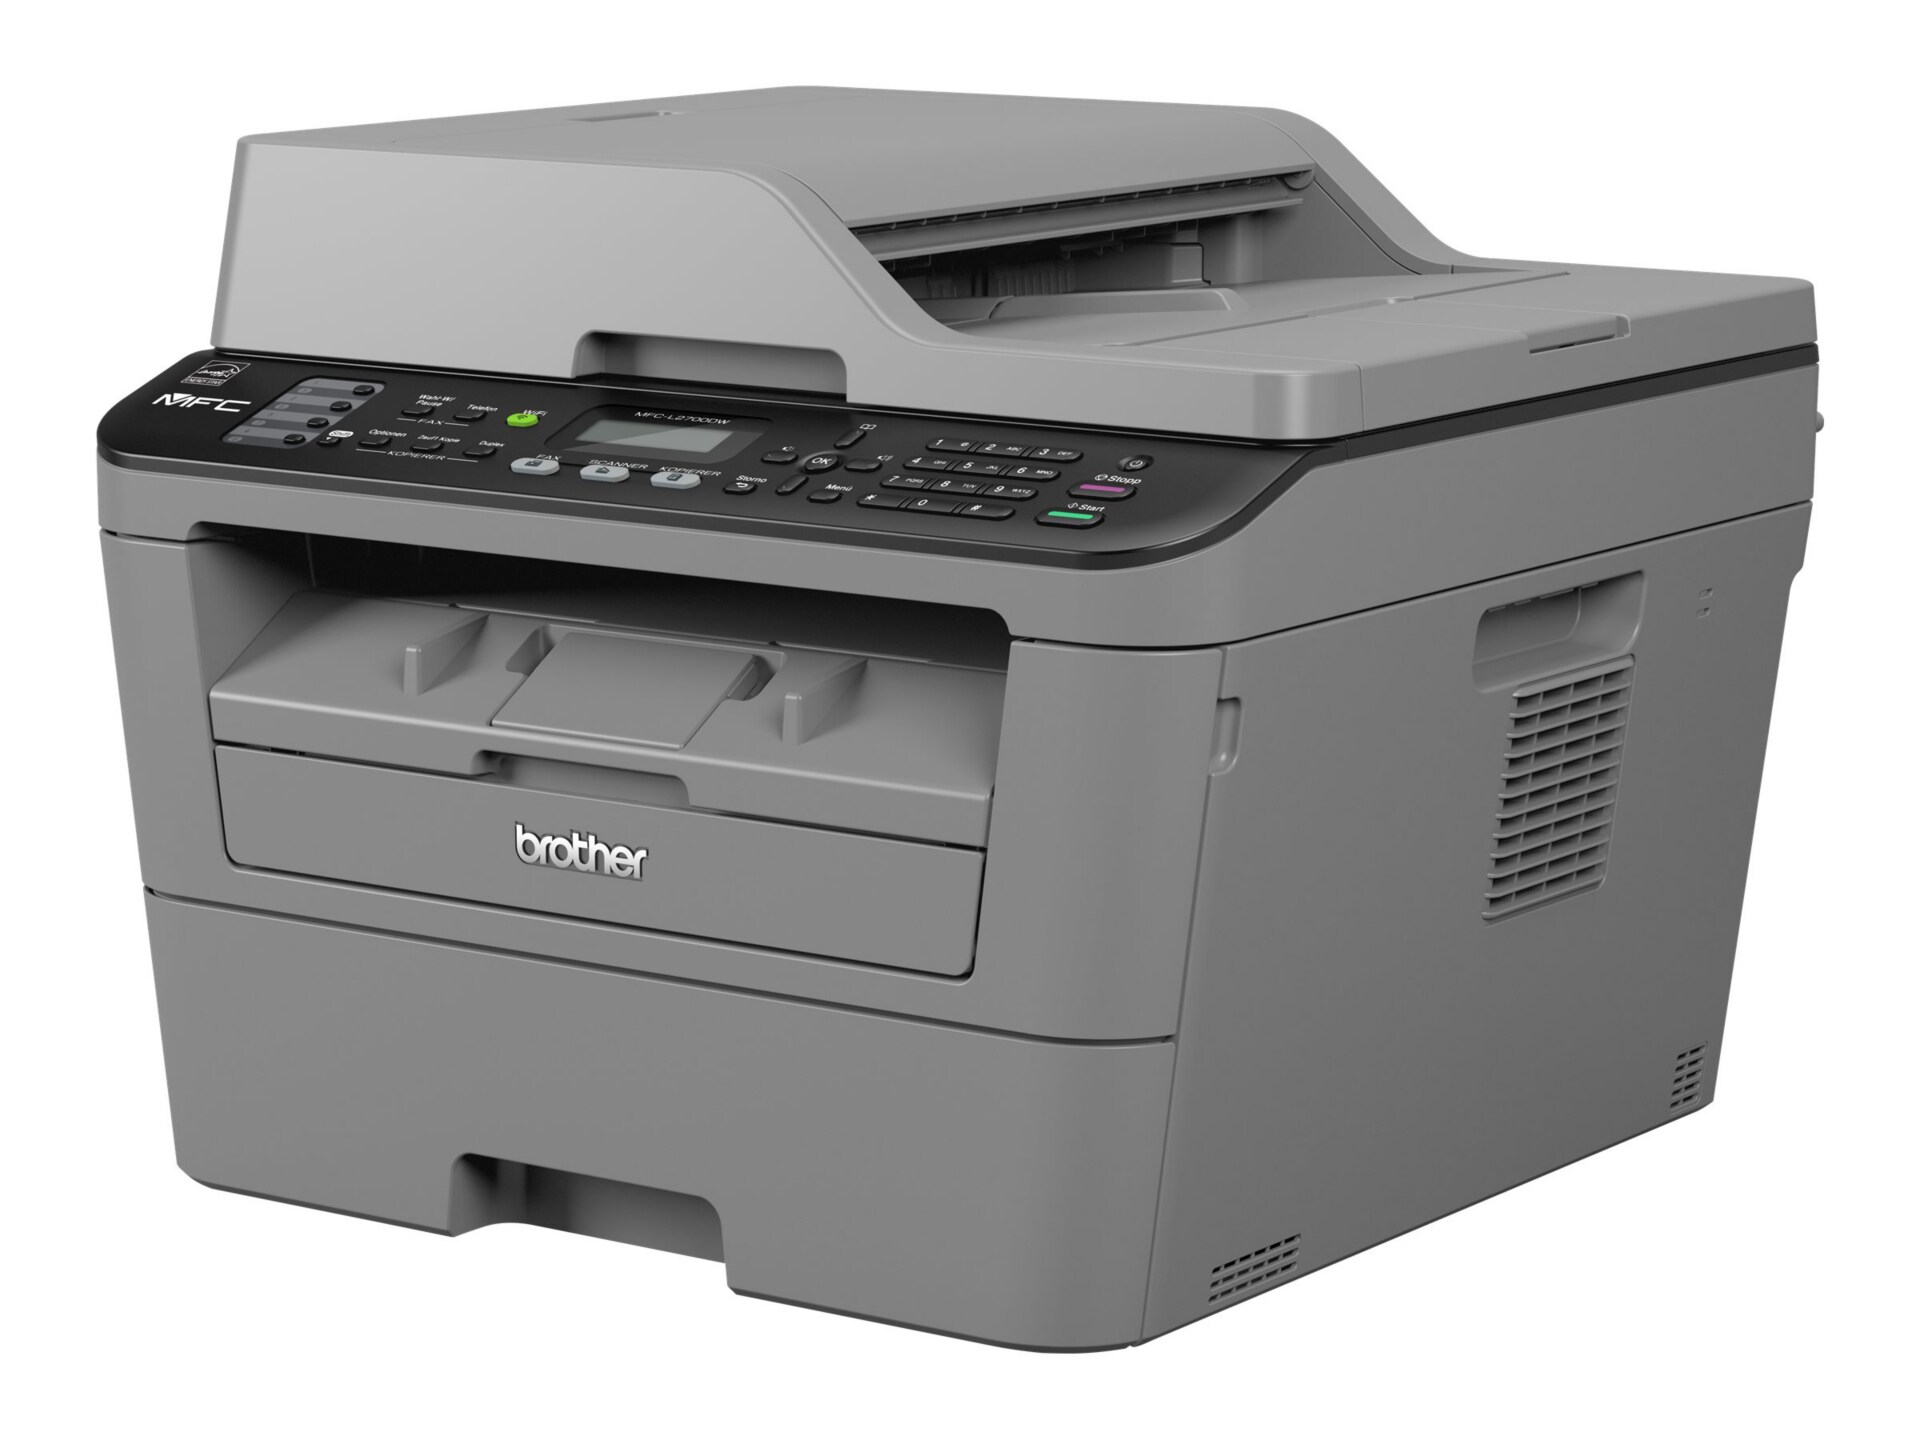 Brother MFC-L2700DW - multifunction printer (B/W)